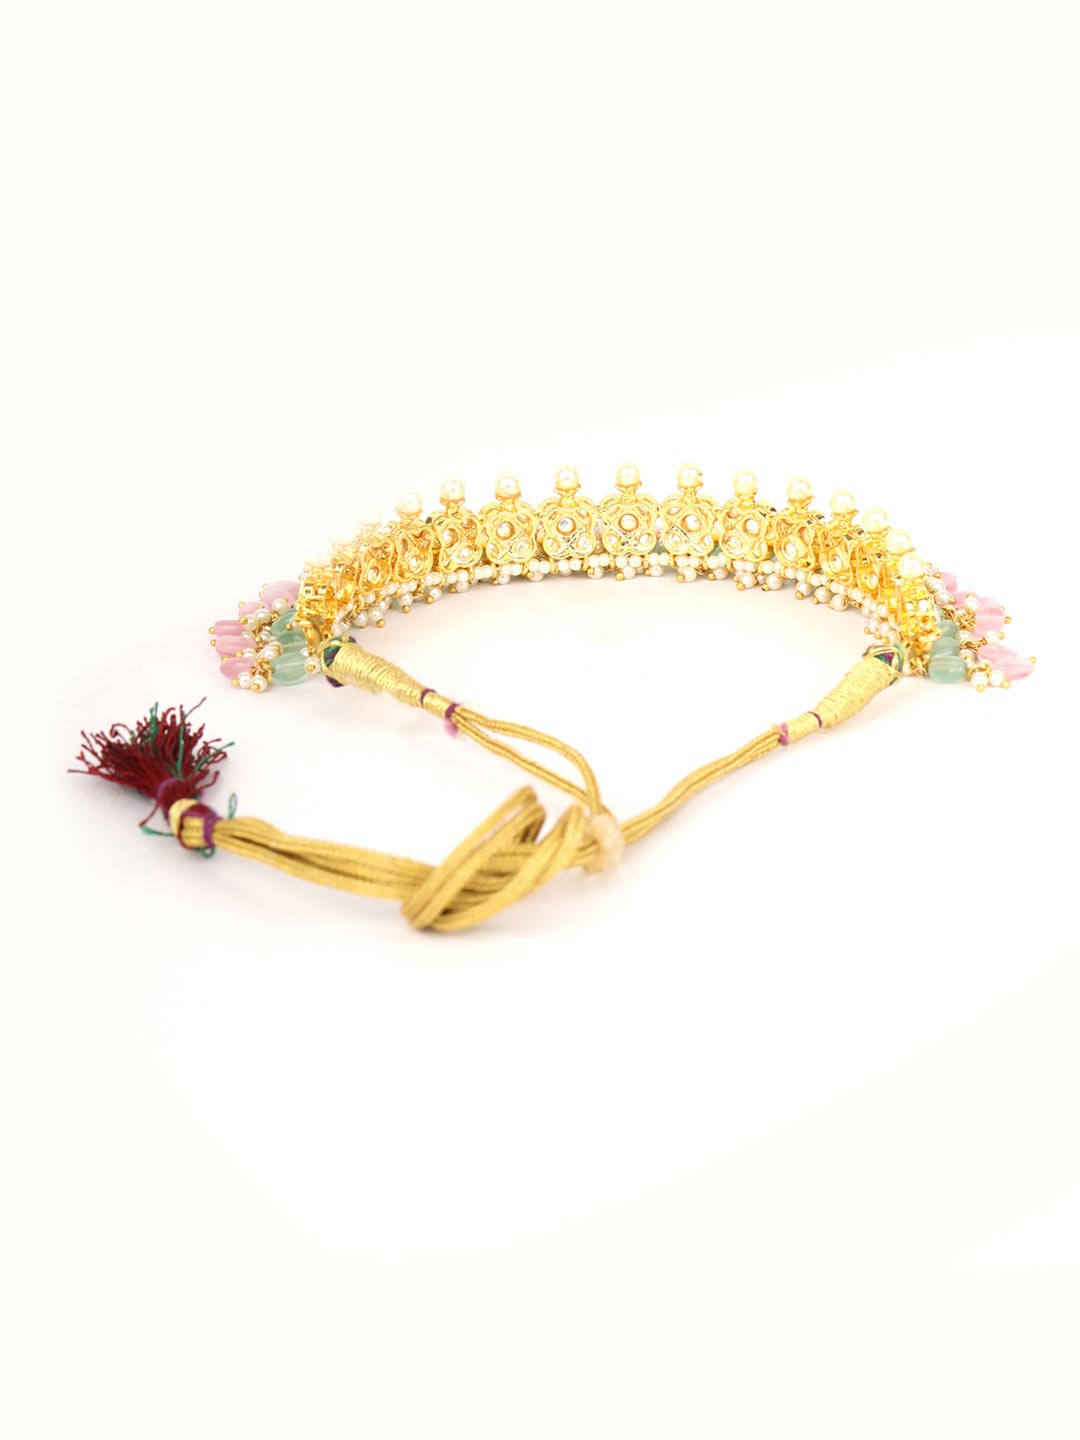 Multi-Color Pearls Beads Kundan Gold Plated Jewellery Set